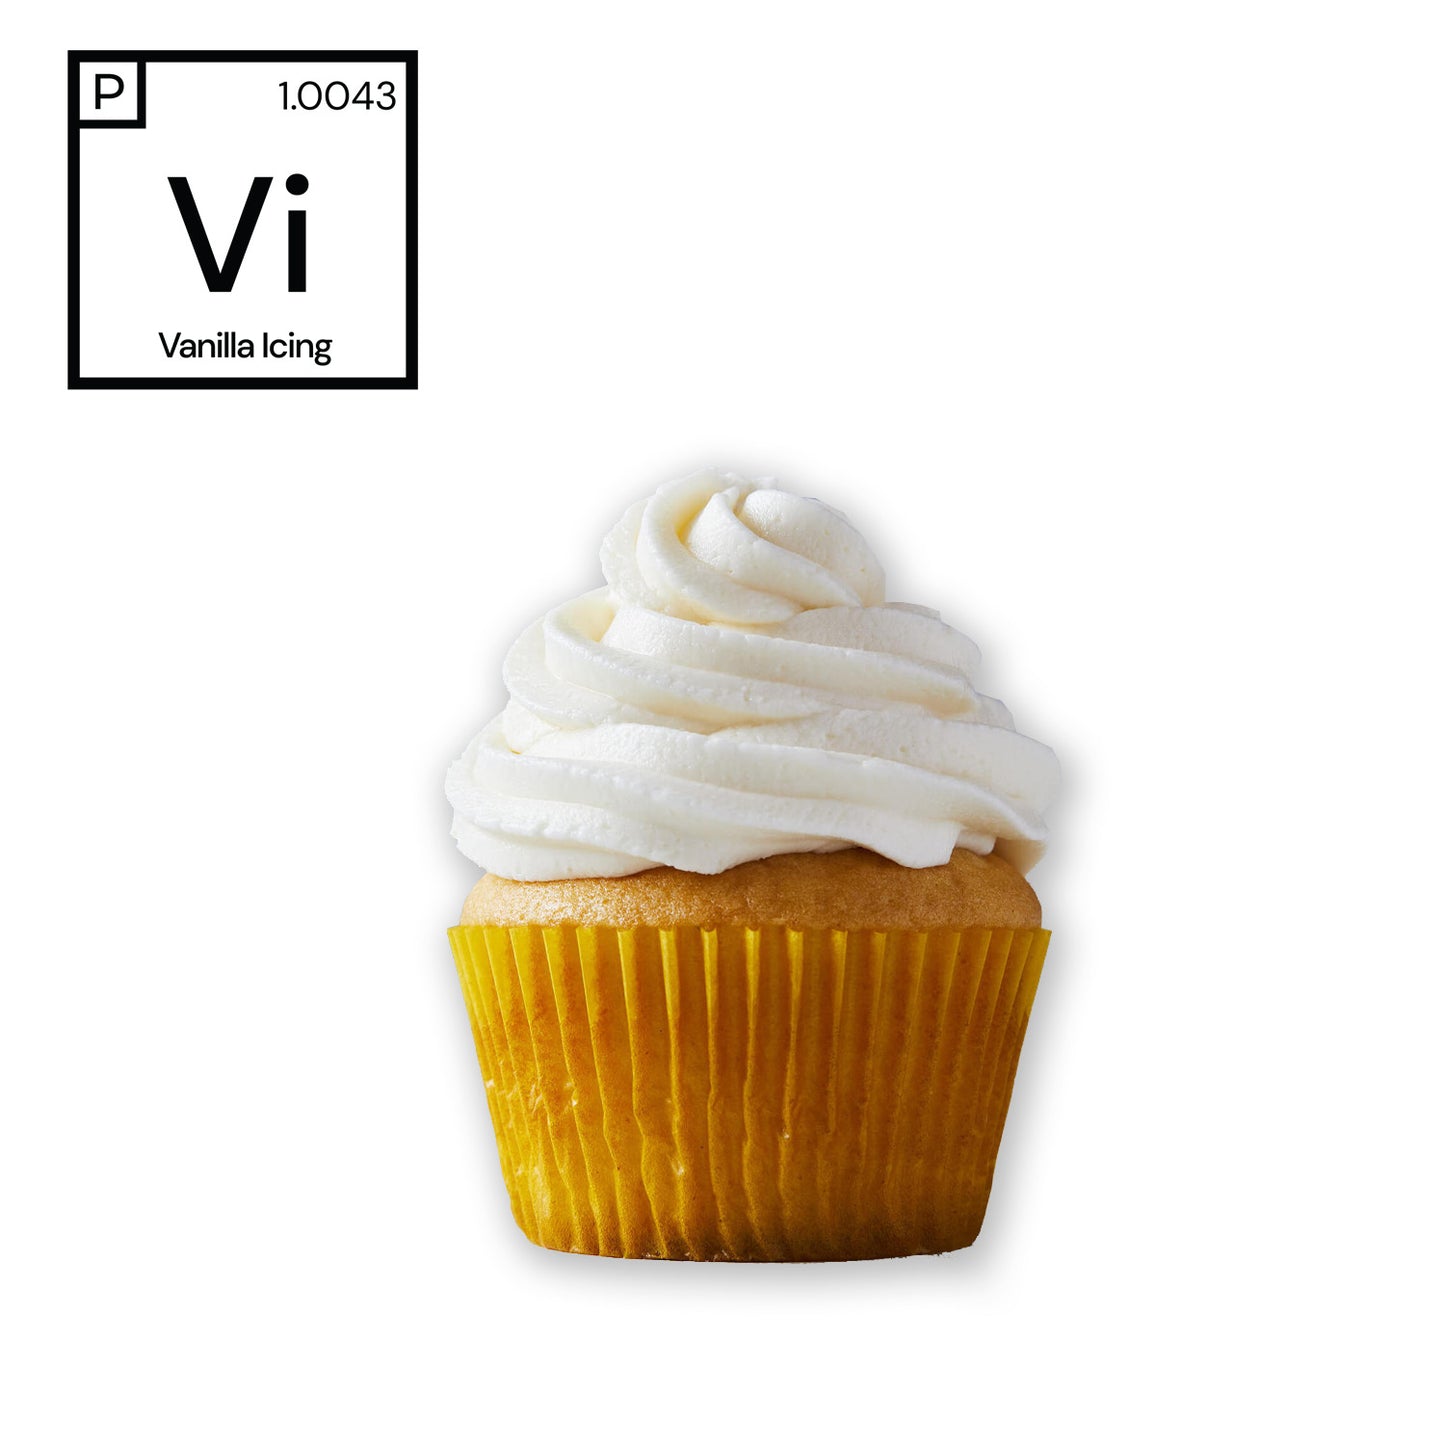 Vanilla Icing Fragrance #1.0043